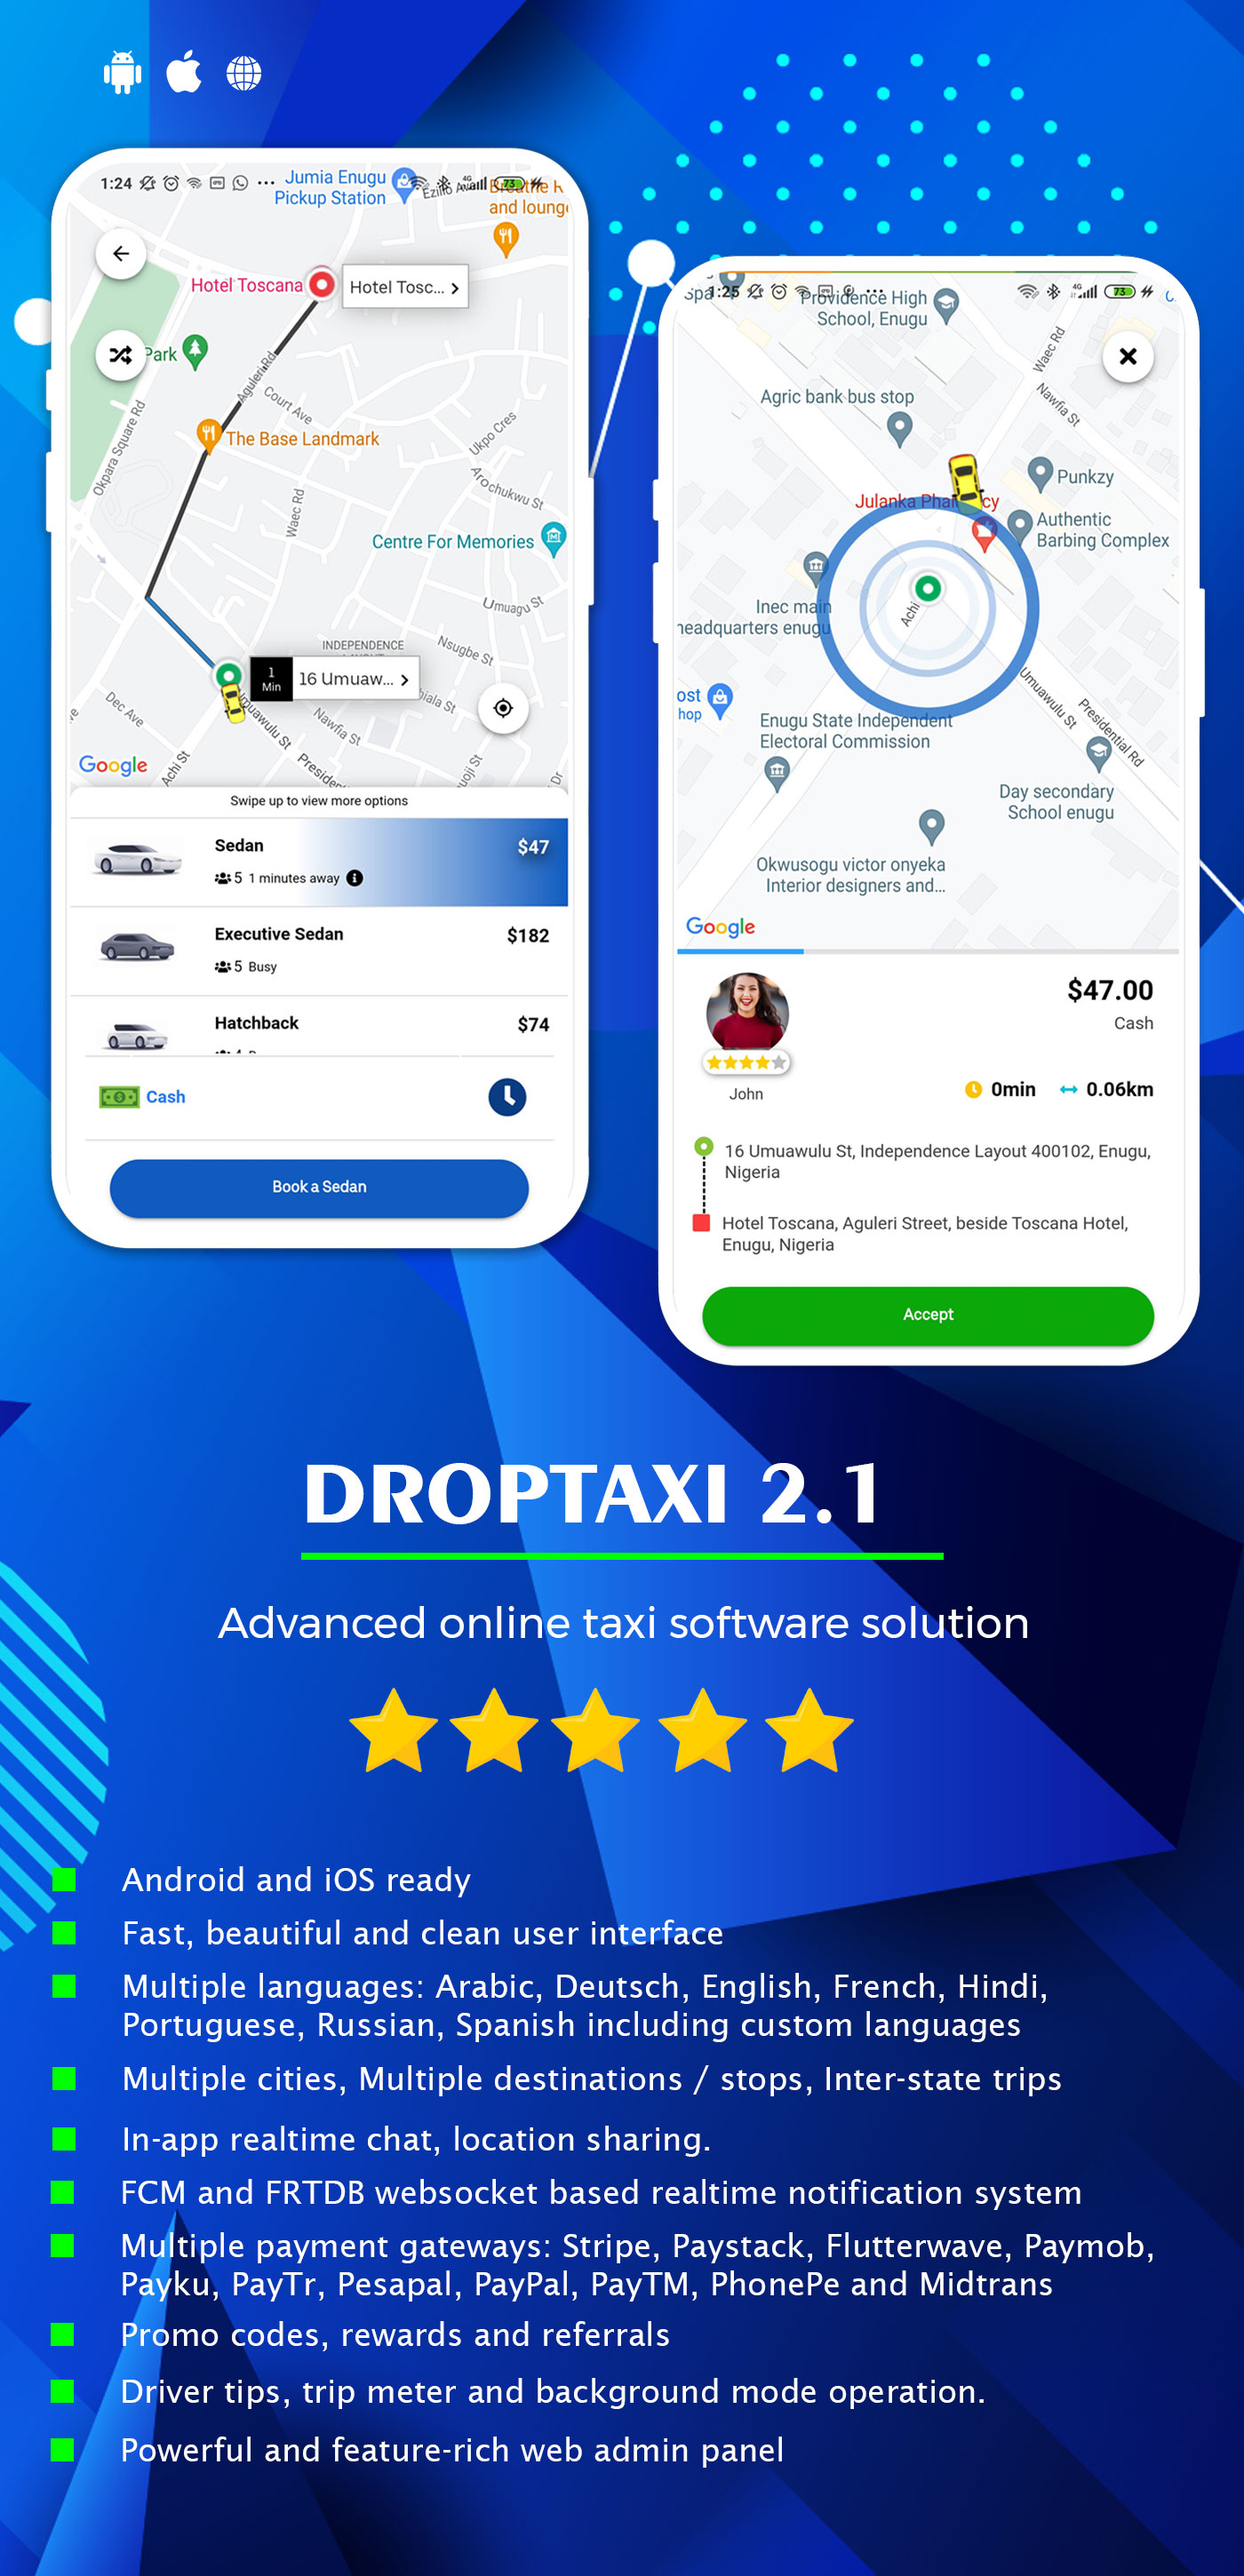 Droptaxi white label taxi app software script - 2